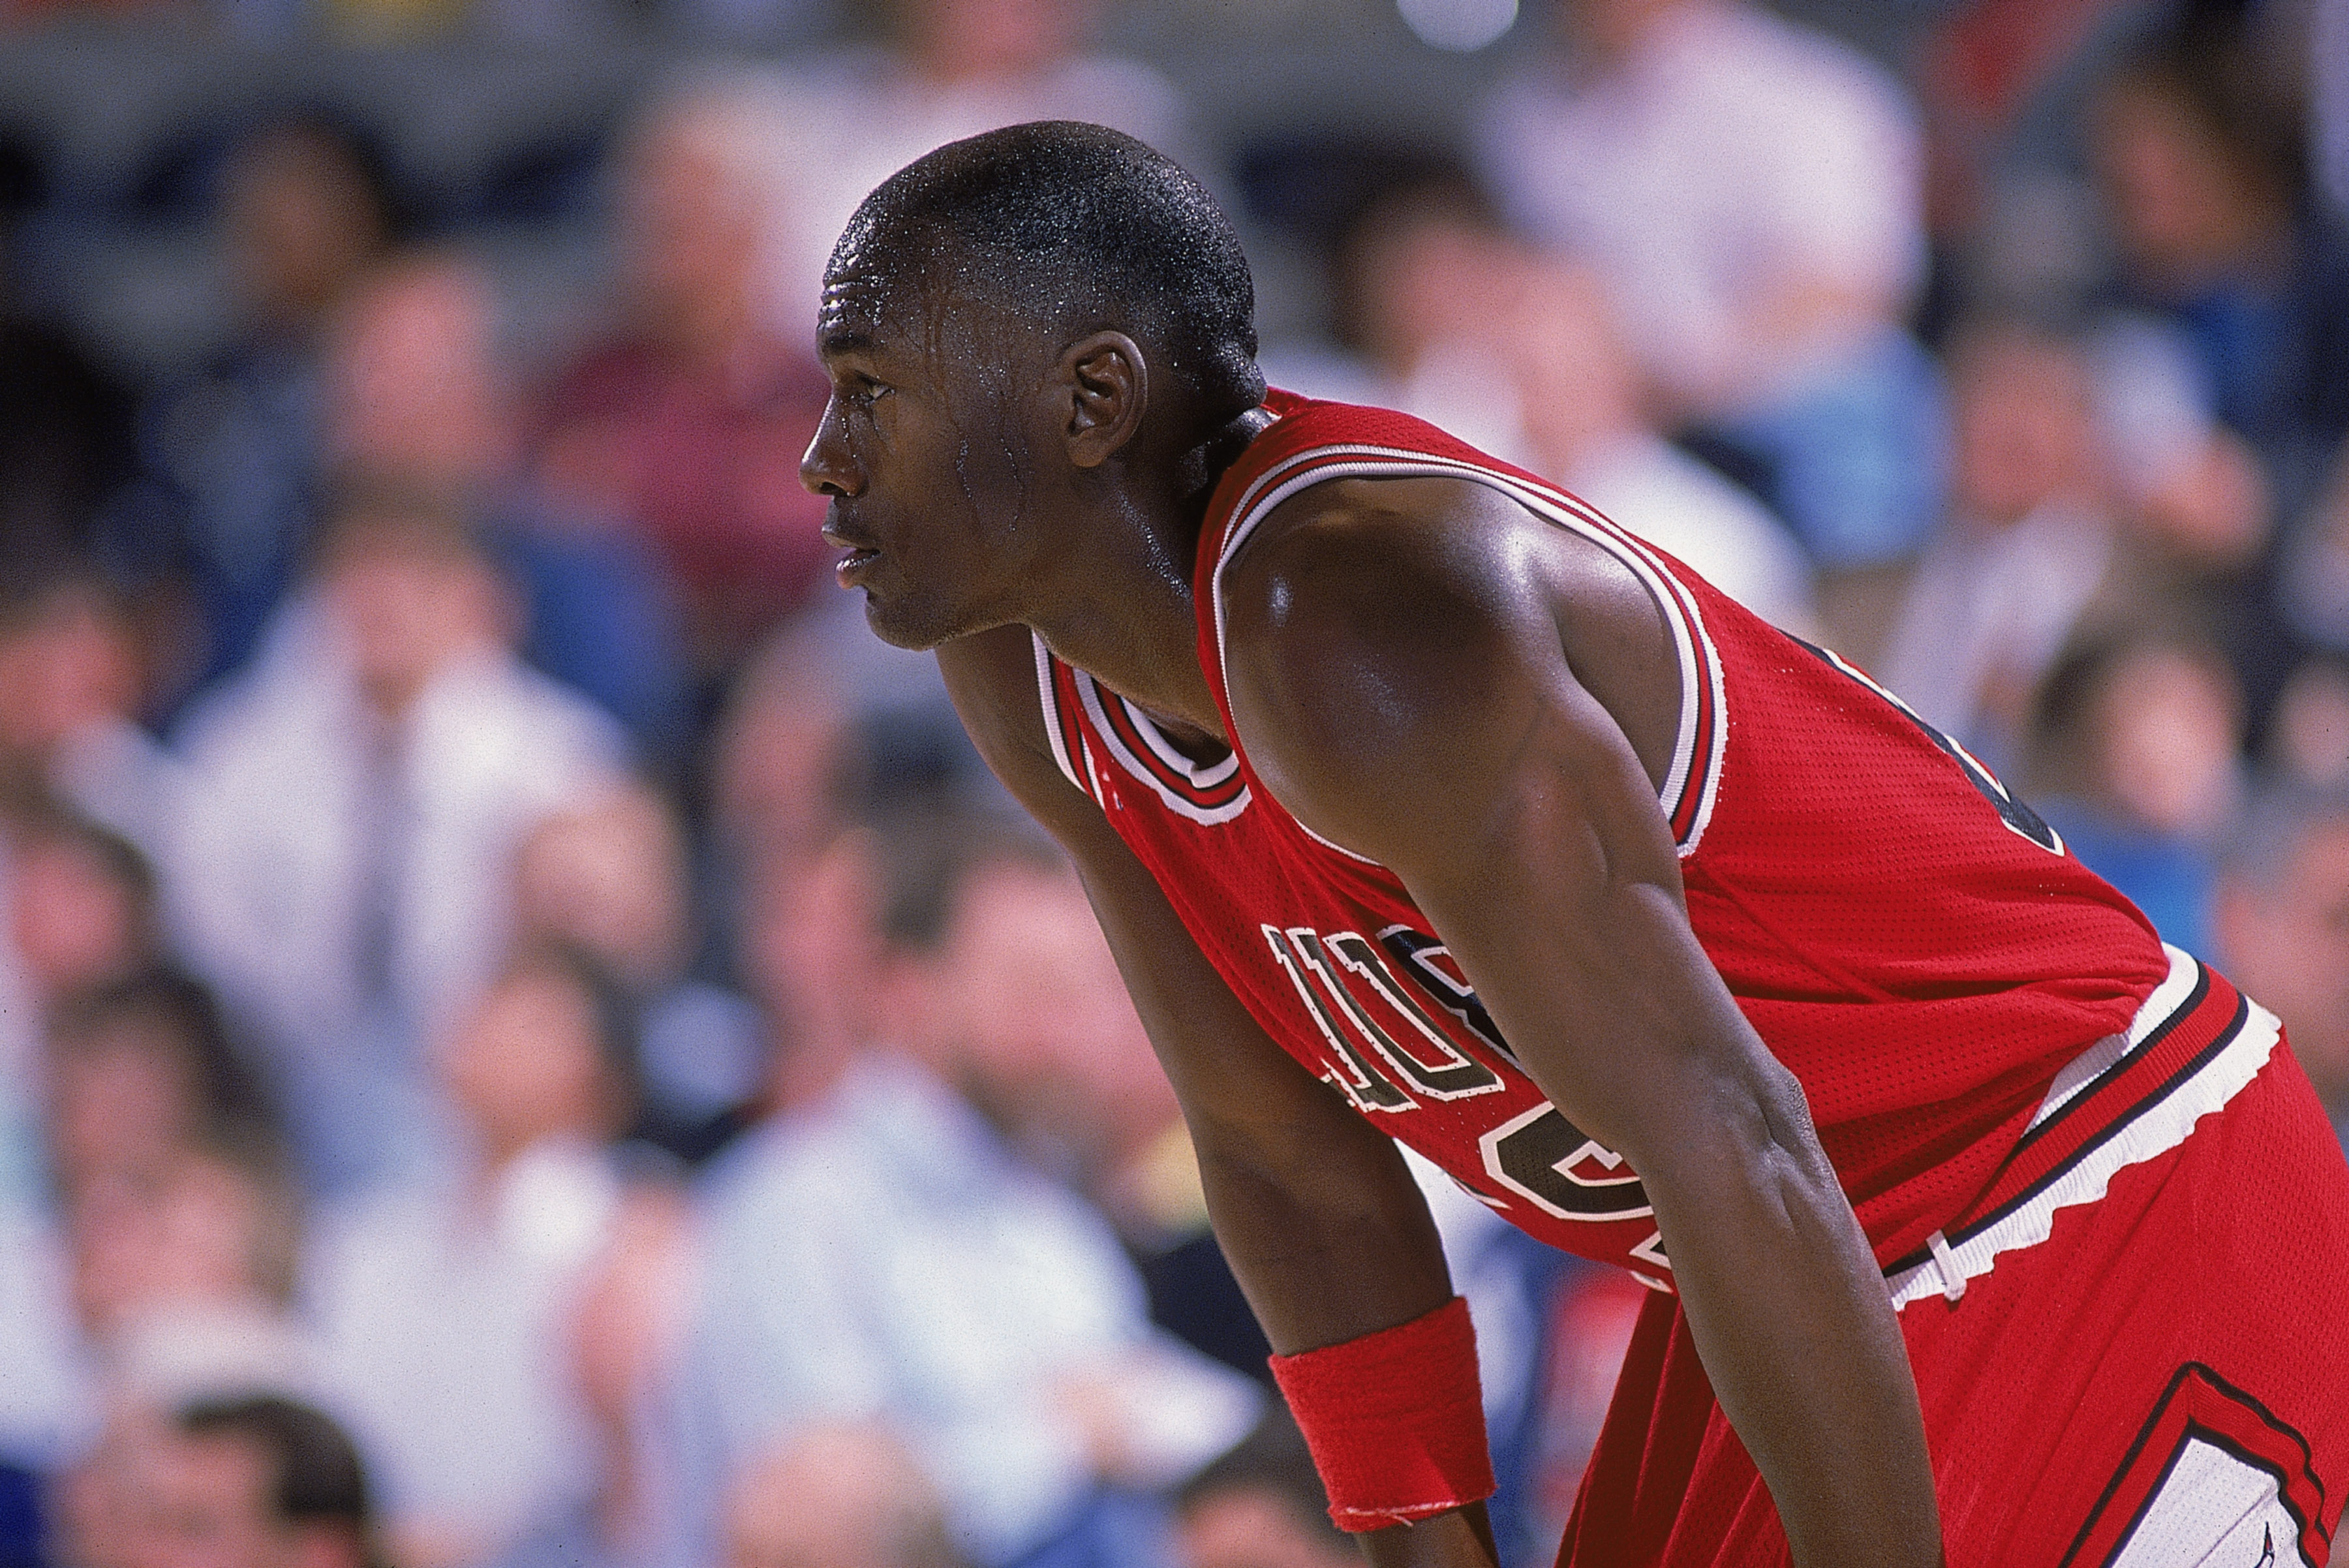 NBA Draft Michael Jordan and the Best Player from Each Draft Class